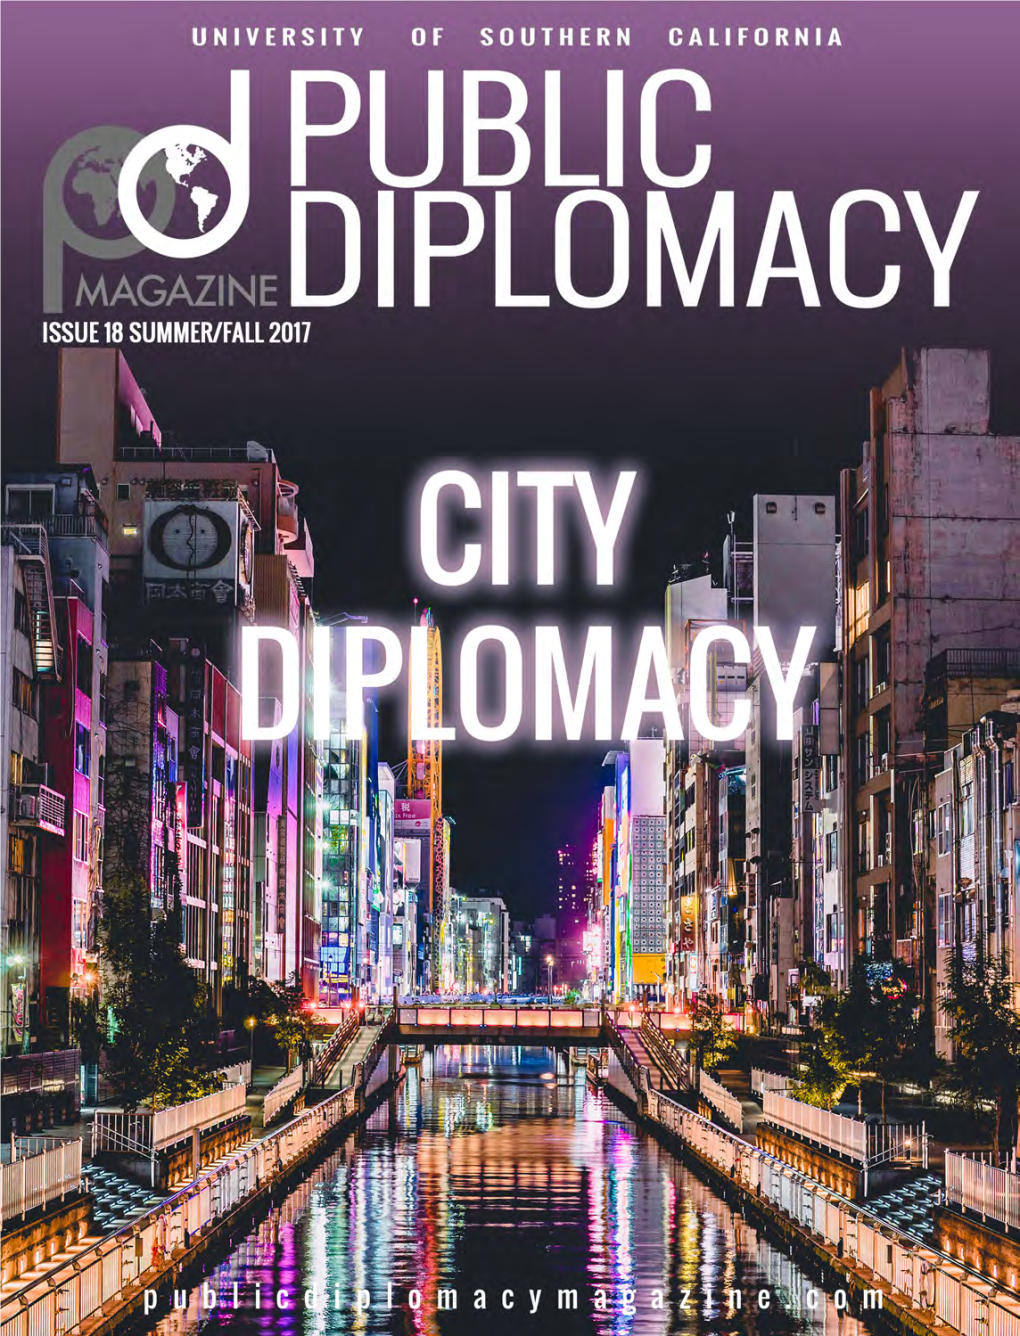 City Diplomacy"